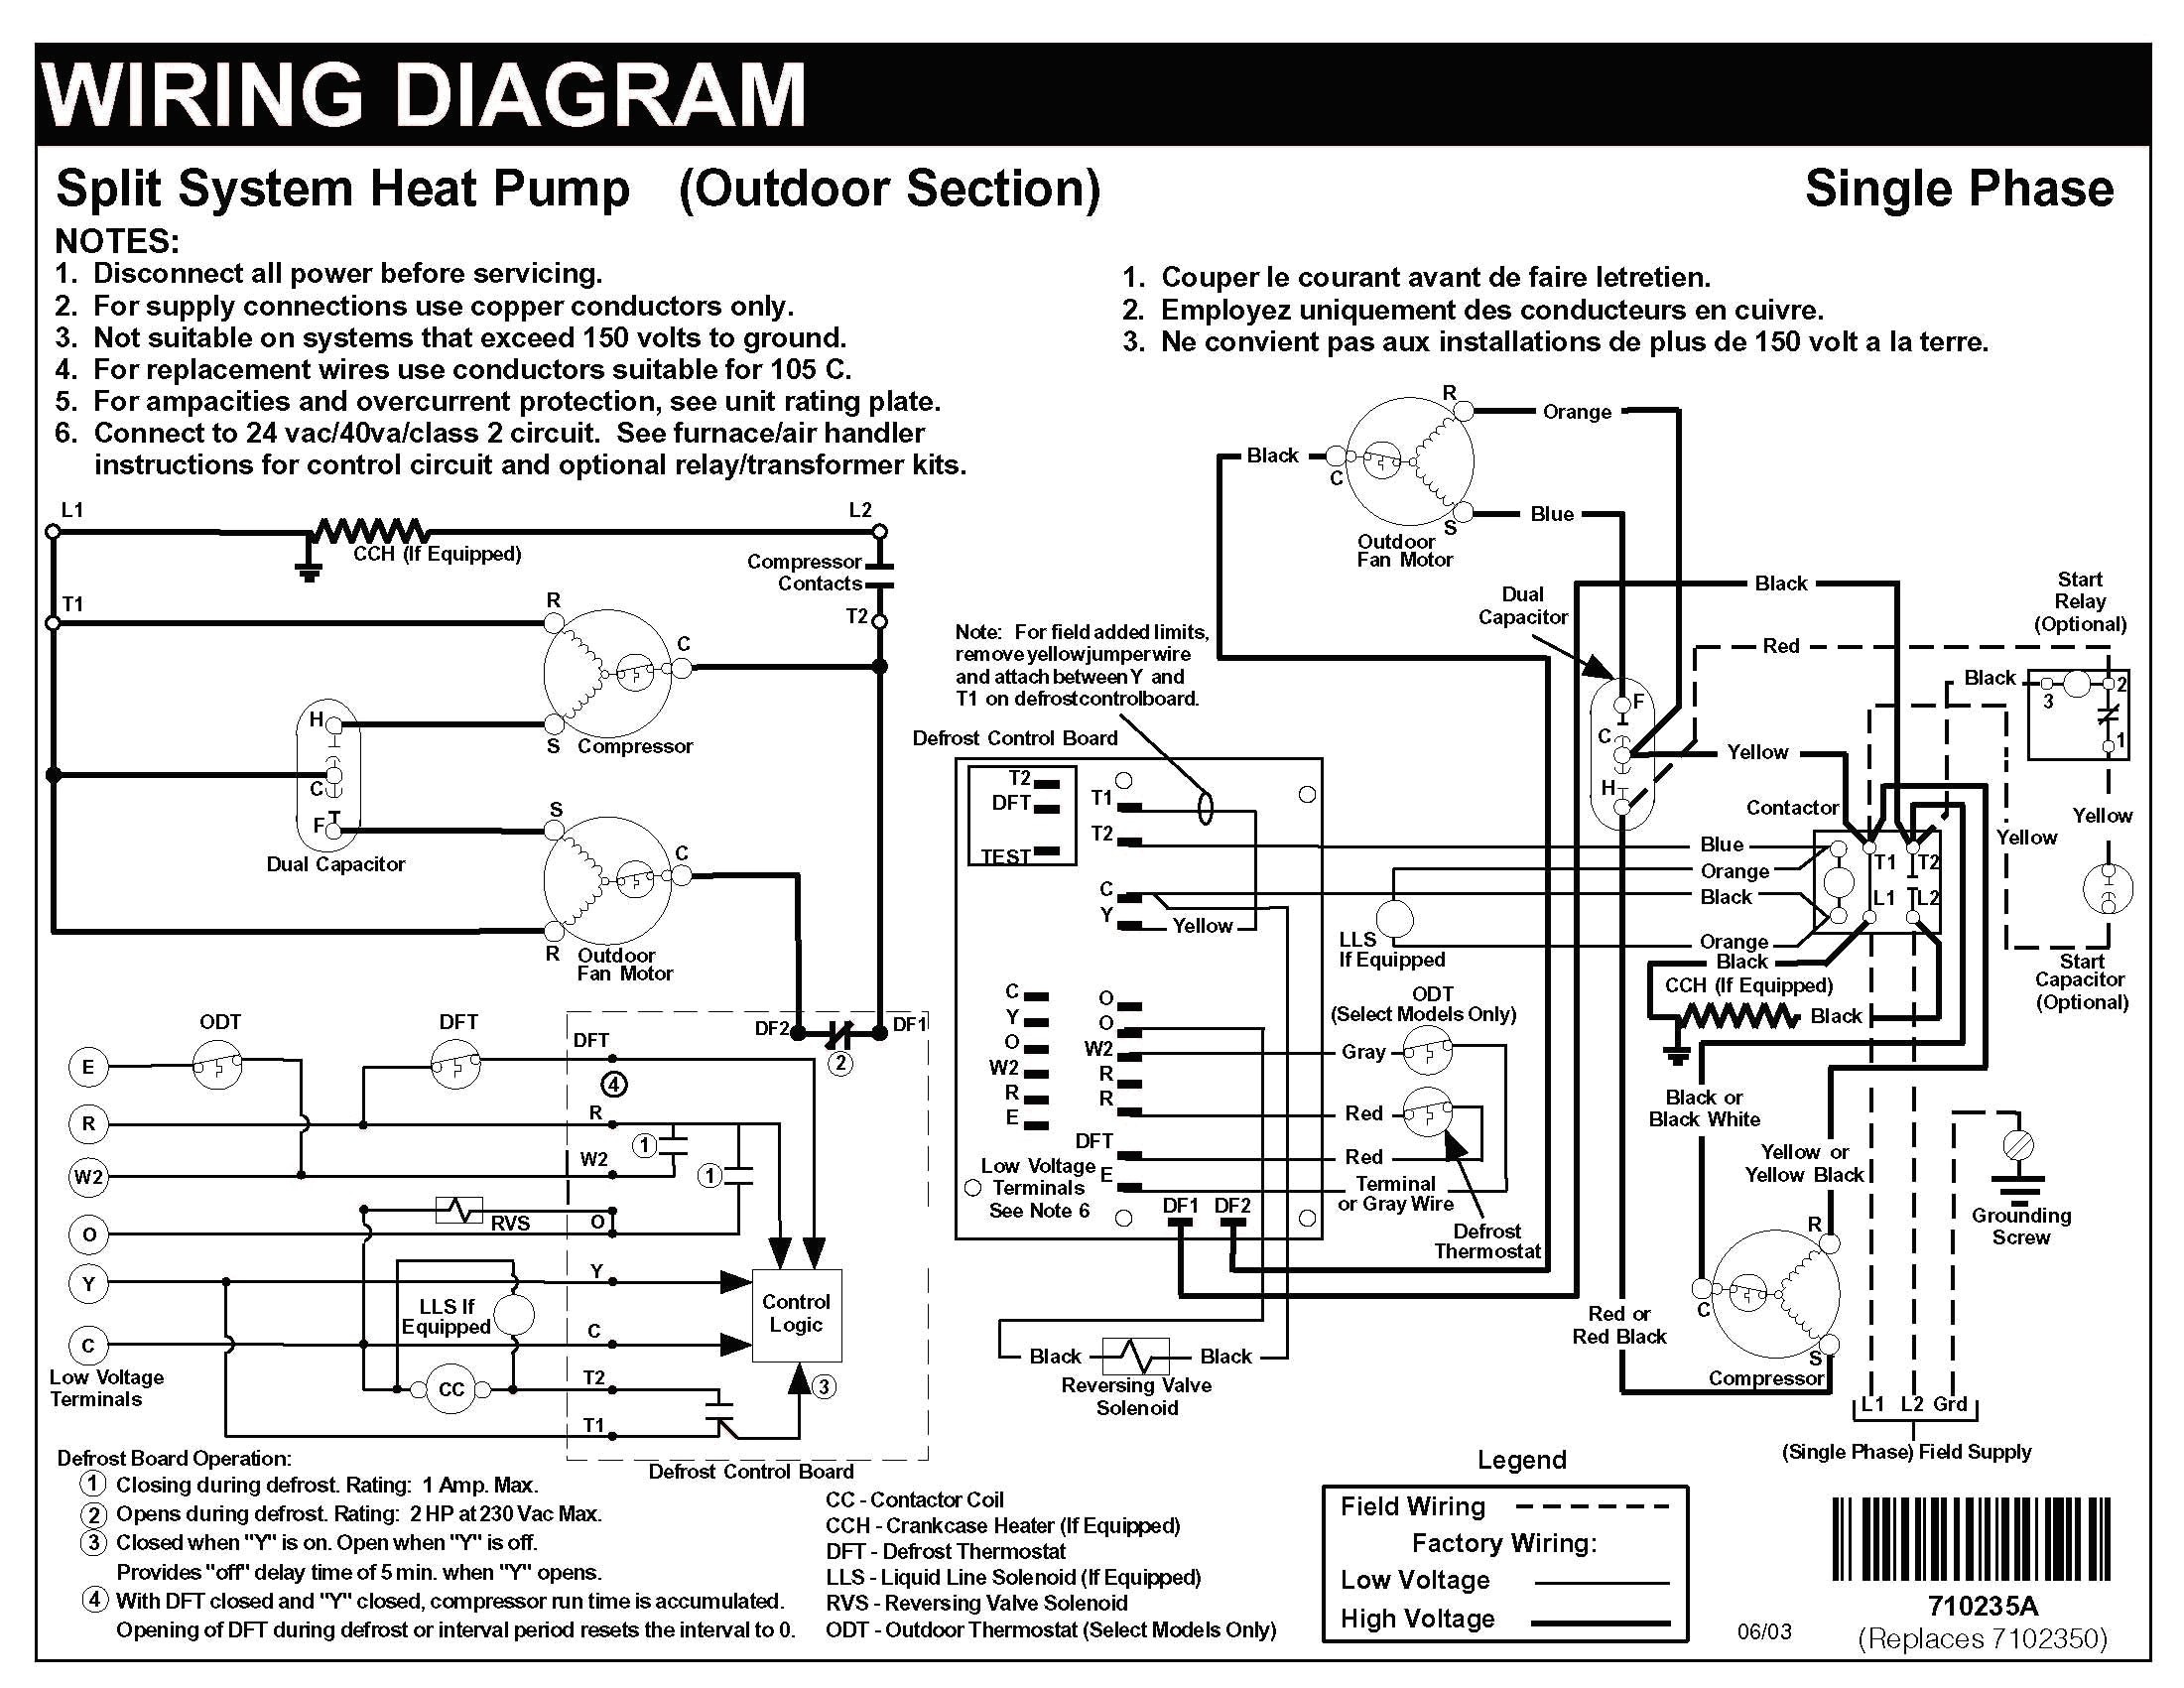 Wiring Diagram Hvac thermostat Fresh Nest thermostat Wiring Diagram Heat Pump Elegant Famous Carrier Heat